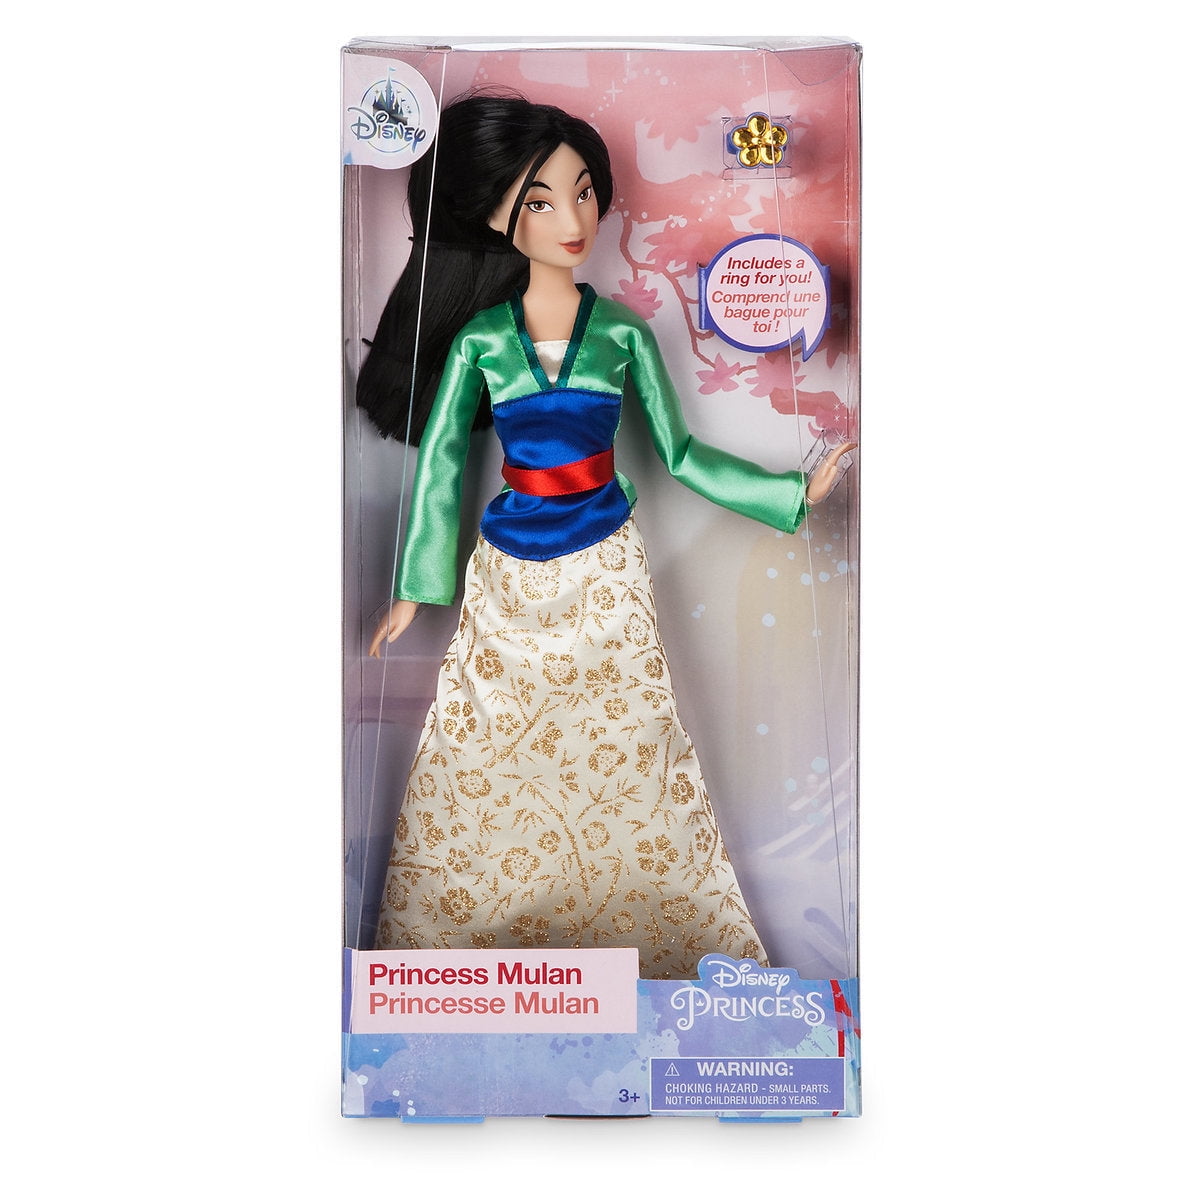 You'll start to see more Mattel Disney Princess dolls here soon, Mulan